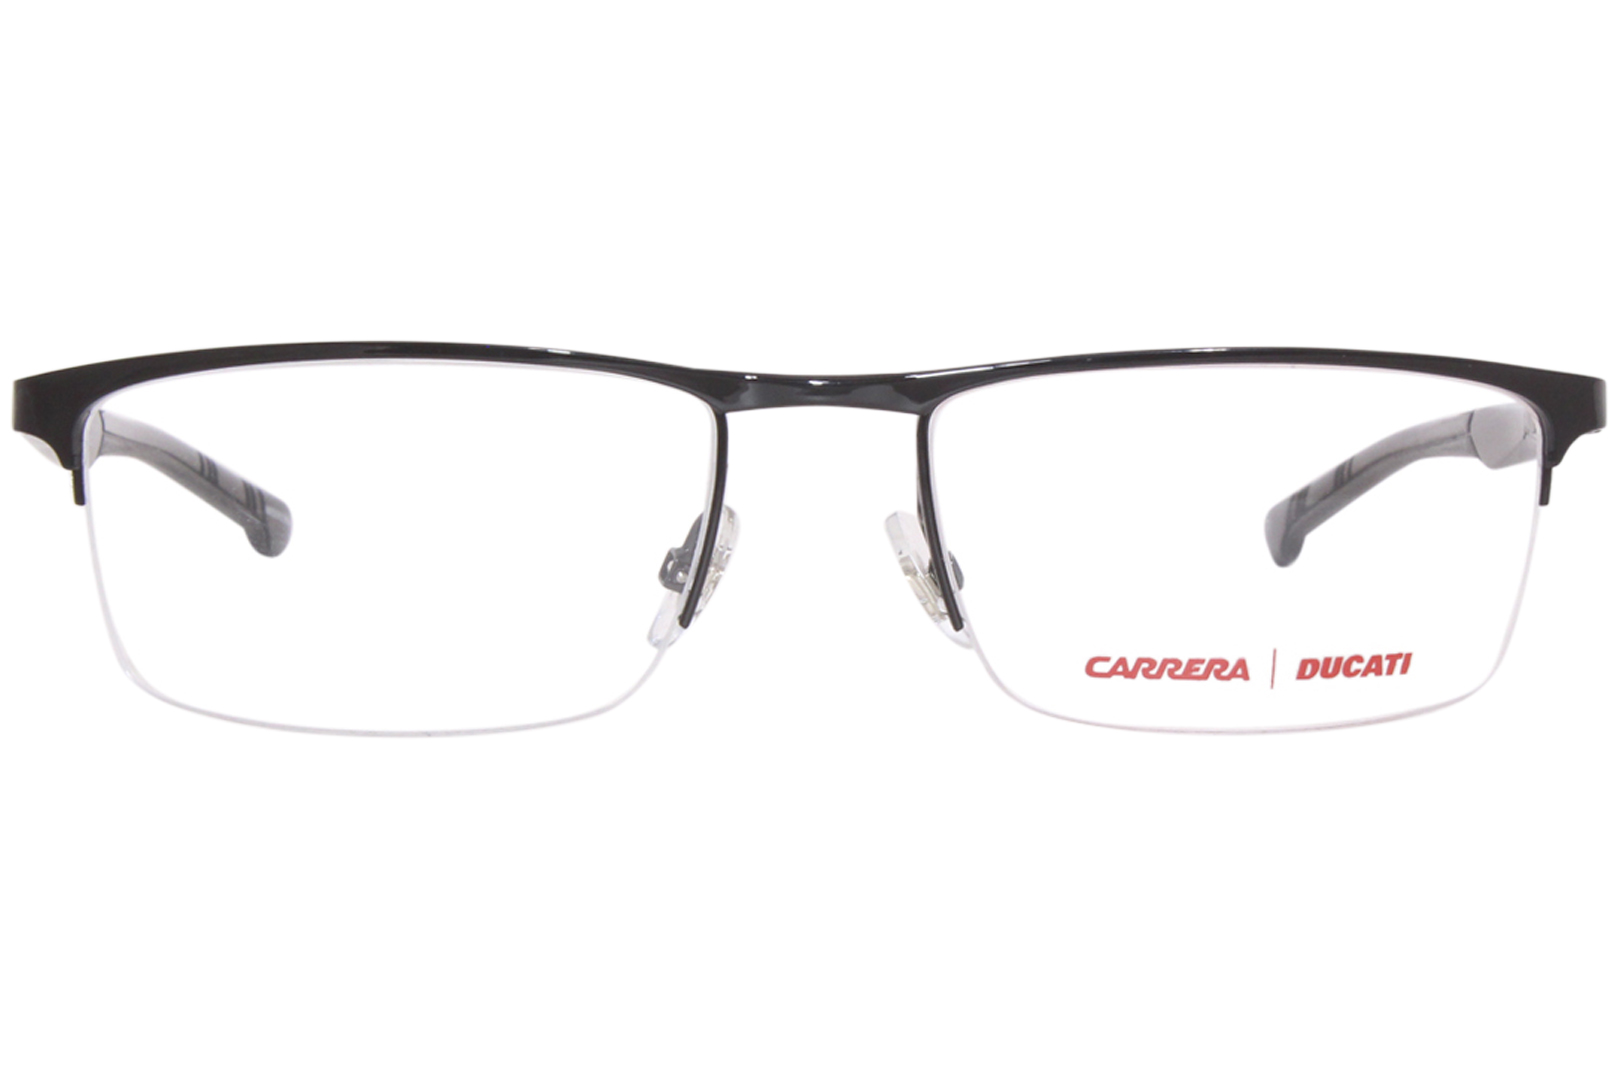 Carrera Ducati Carduc 009 807 Eyeglasses Men's Black Semi Rim 55-18-145 ...